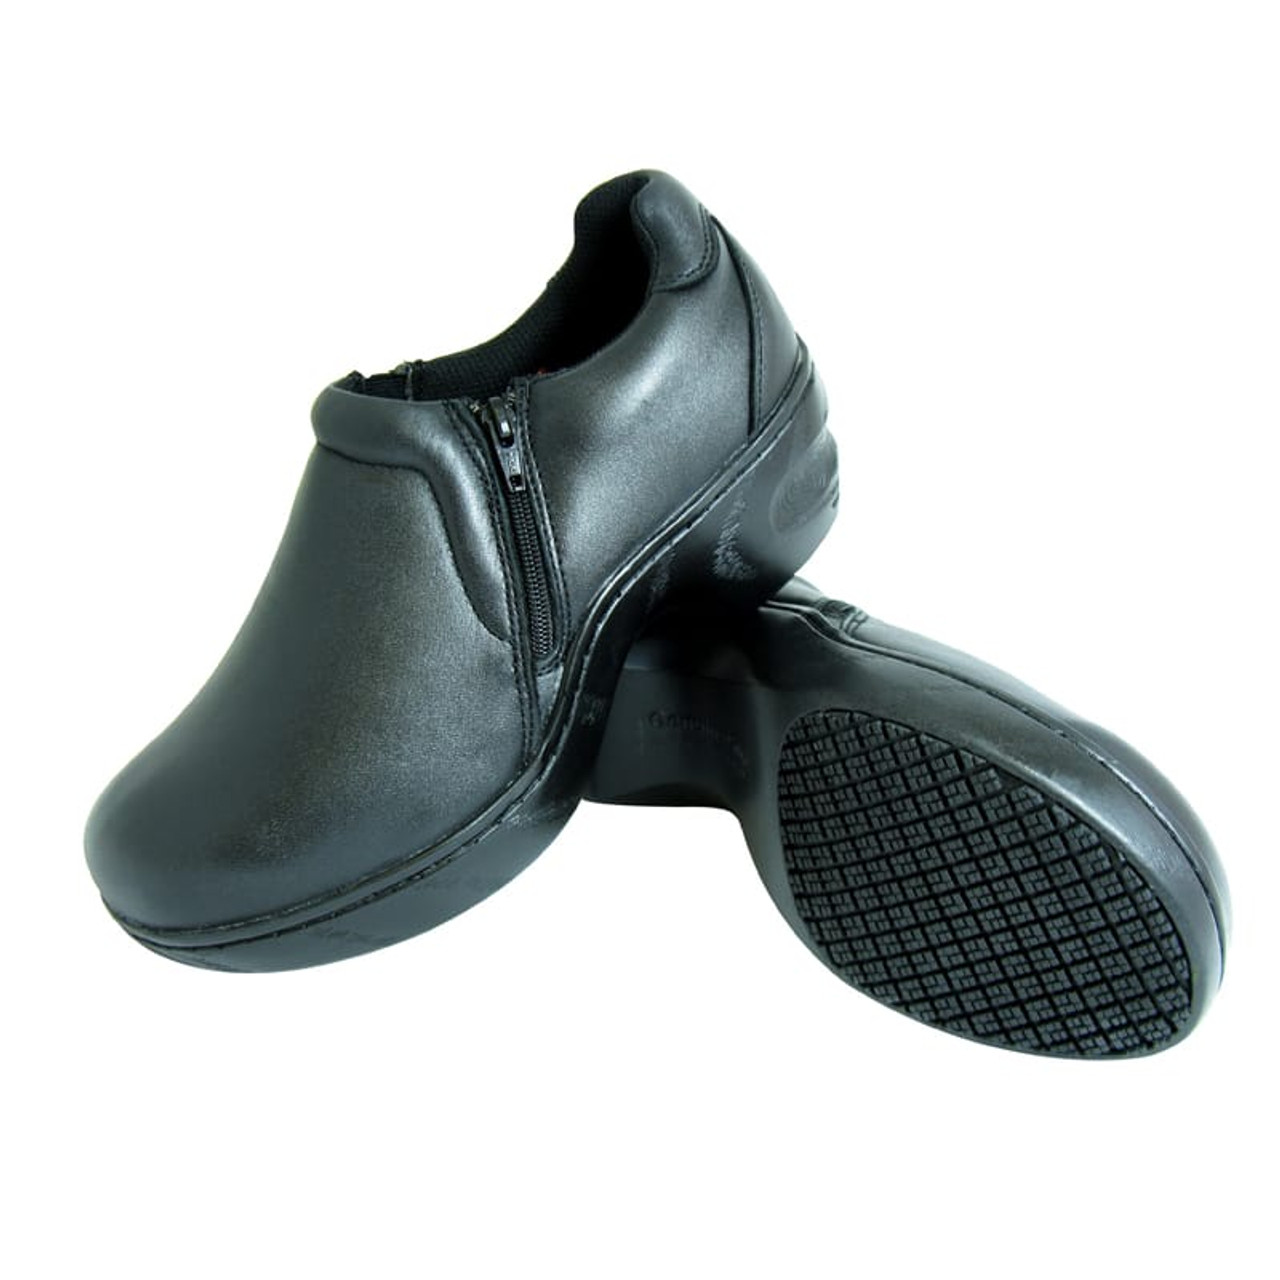 affordable slip resistant shoes